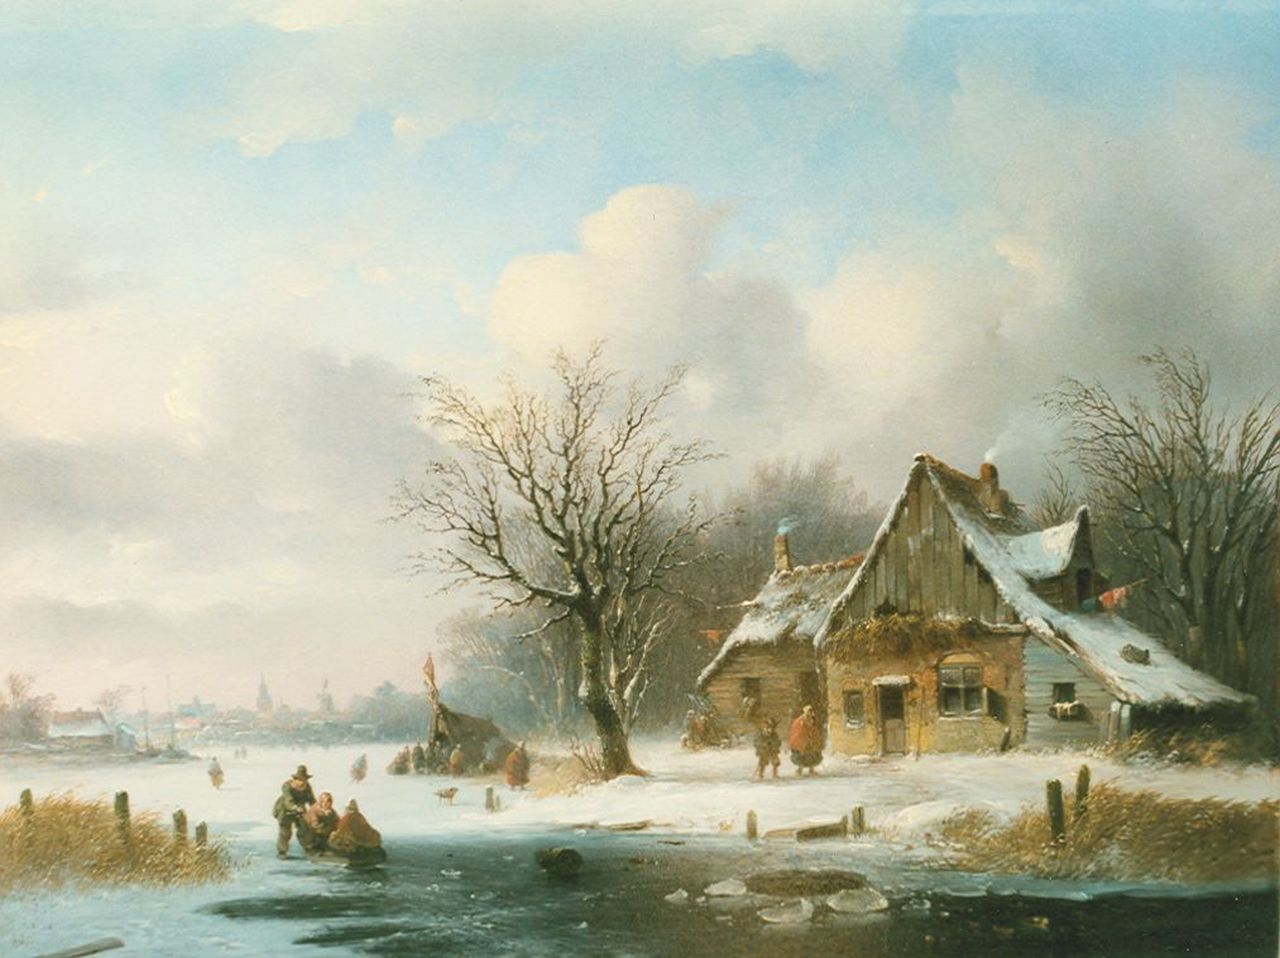 Stok J. van der | Jacobus van der Stok, Skaters and a 'koek en zopie' on the ice, Öl auf Holz 35,5 x 46,4 cm